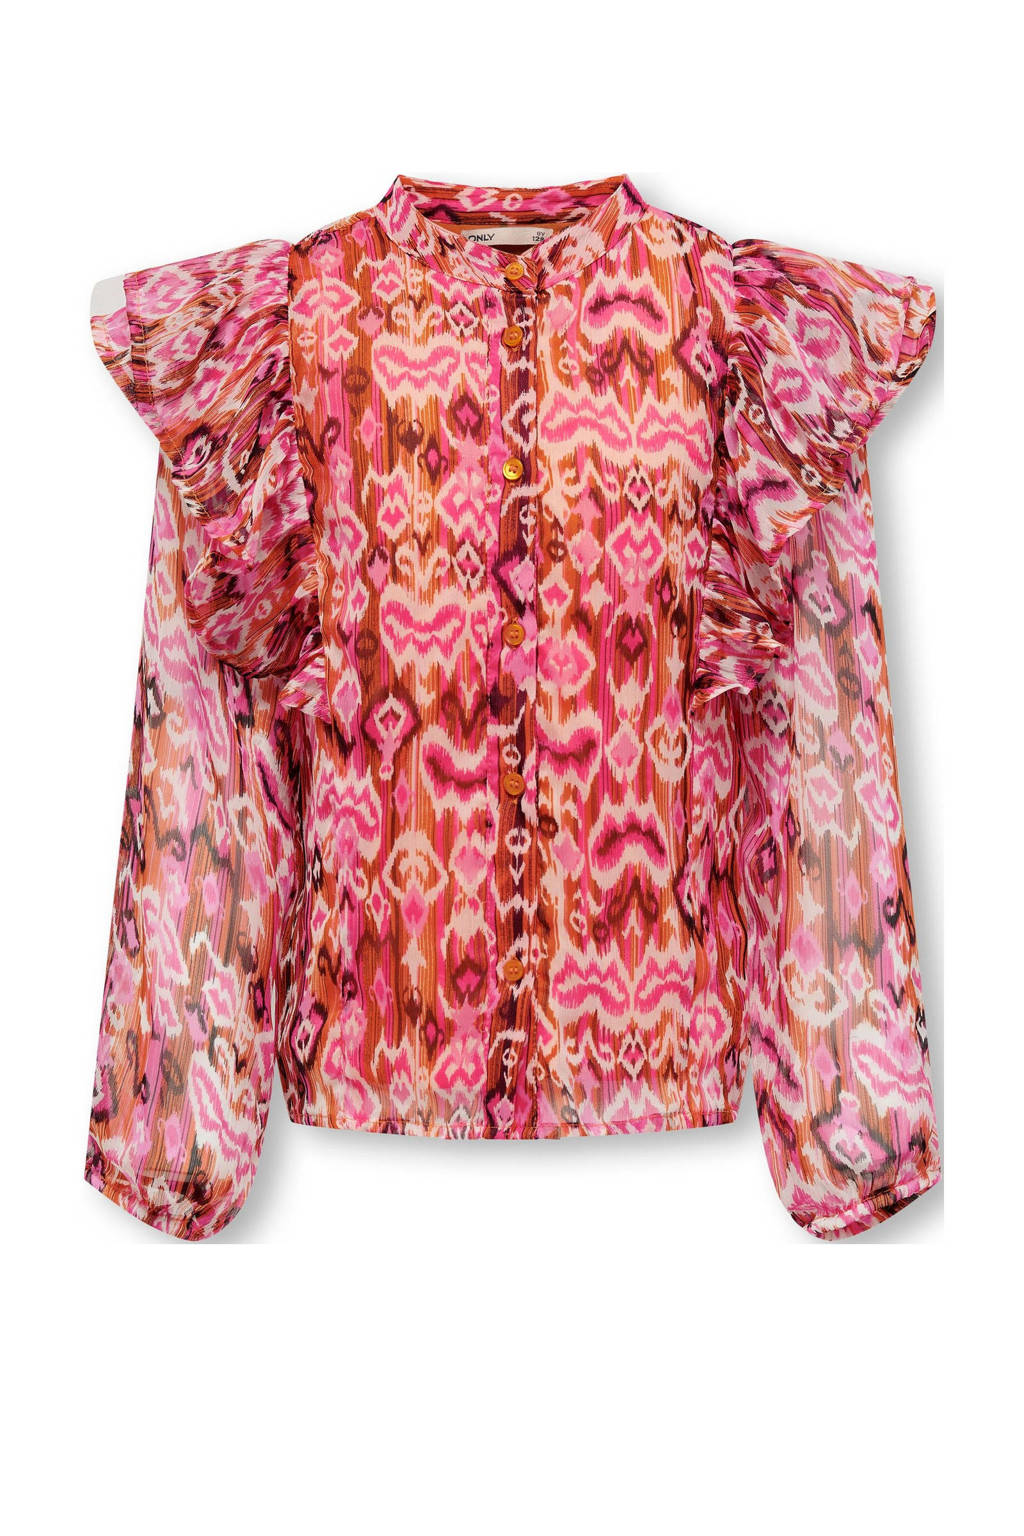 semi-transparante blouse KOGZABELLA met all over print roze/rood/oranje